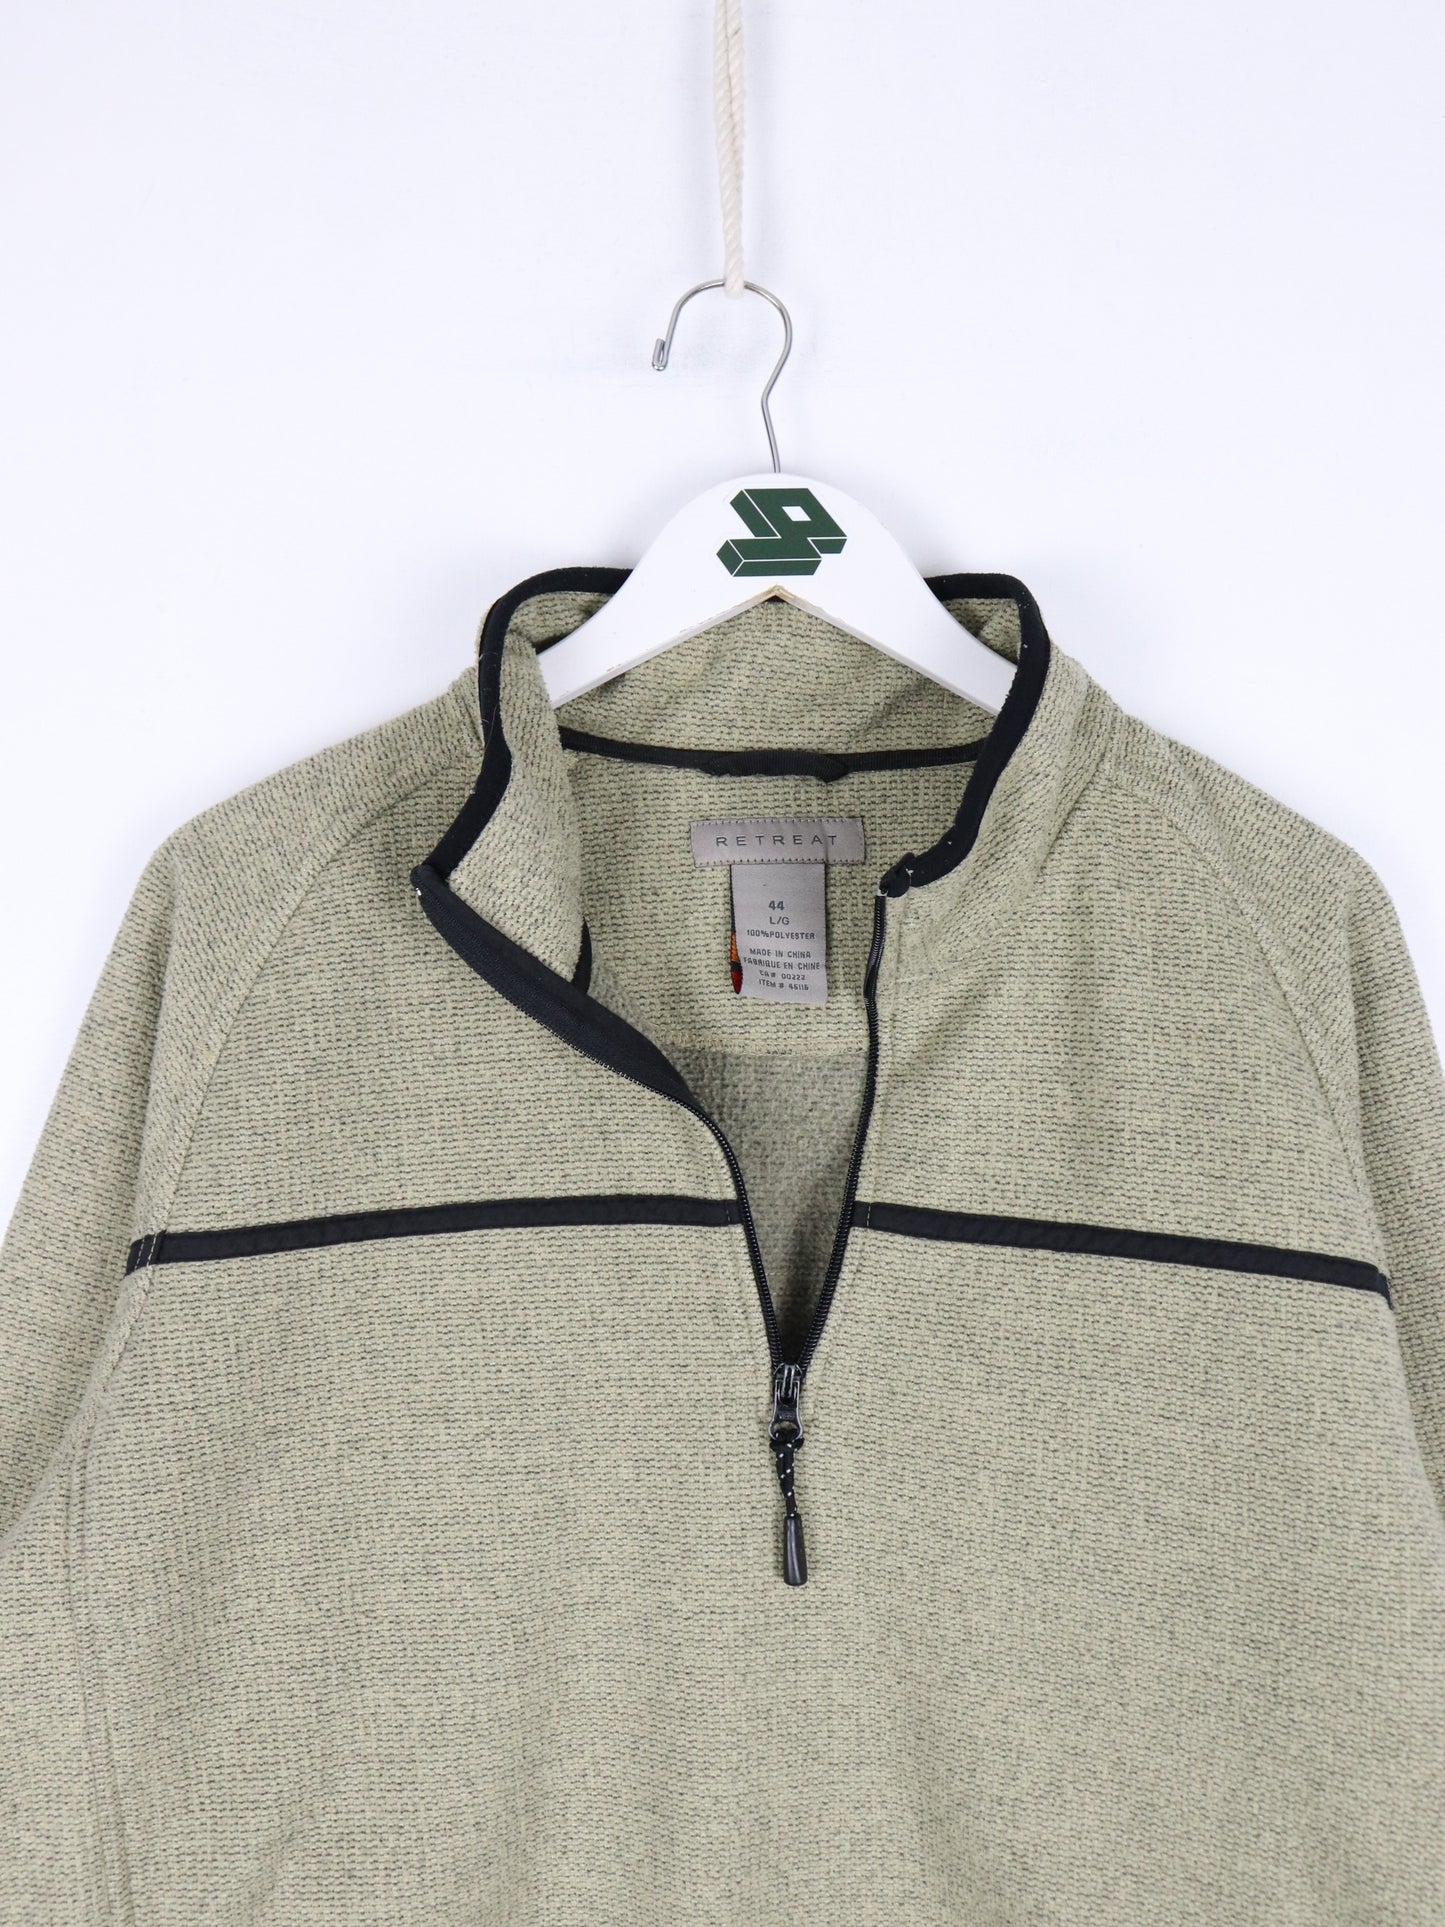 Vintage Retreat Sweater Mens Large Green Quarter Zip Outdoors